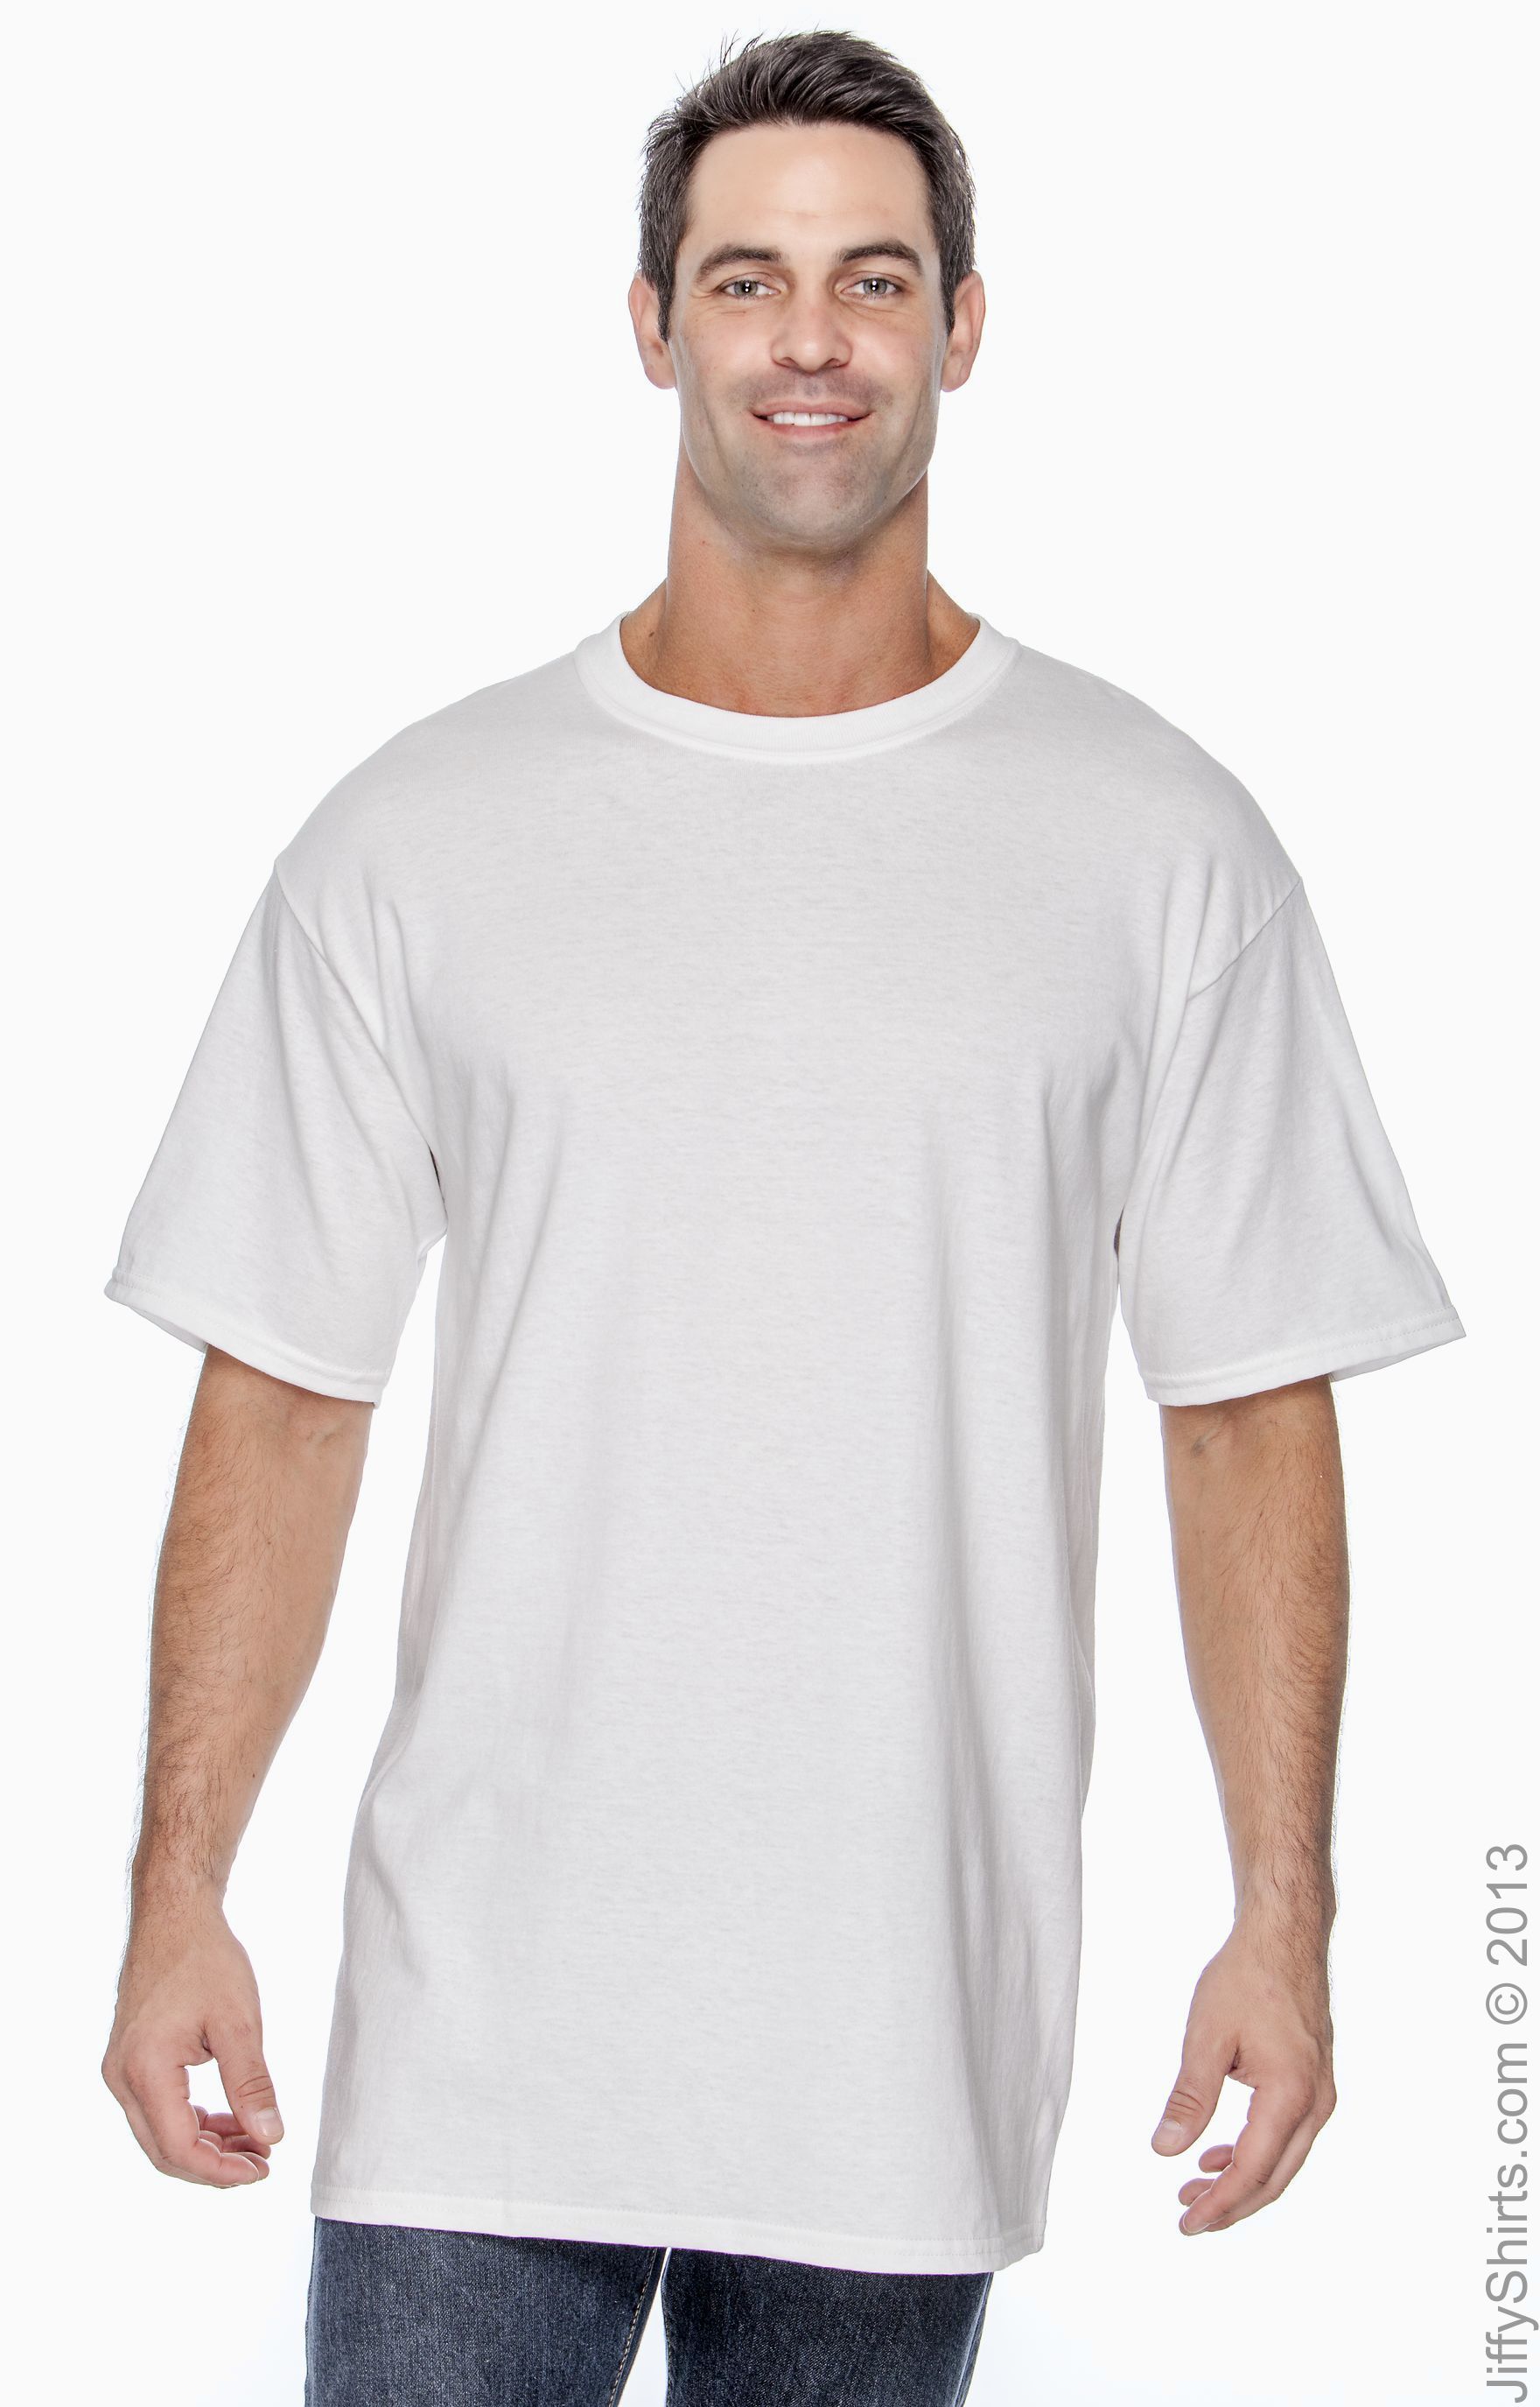 Style # G200 - Original Label Safety Orange 5XL - By Gildan Adult Ultra Cotton 6 Oz T-Shirt 